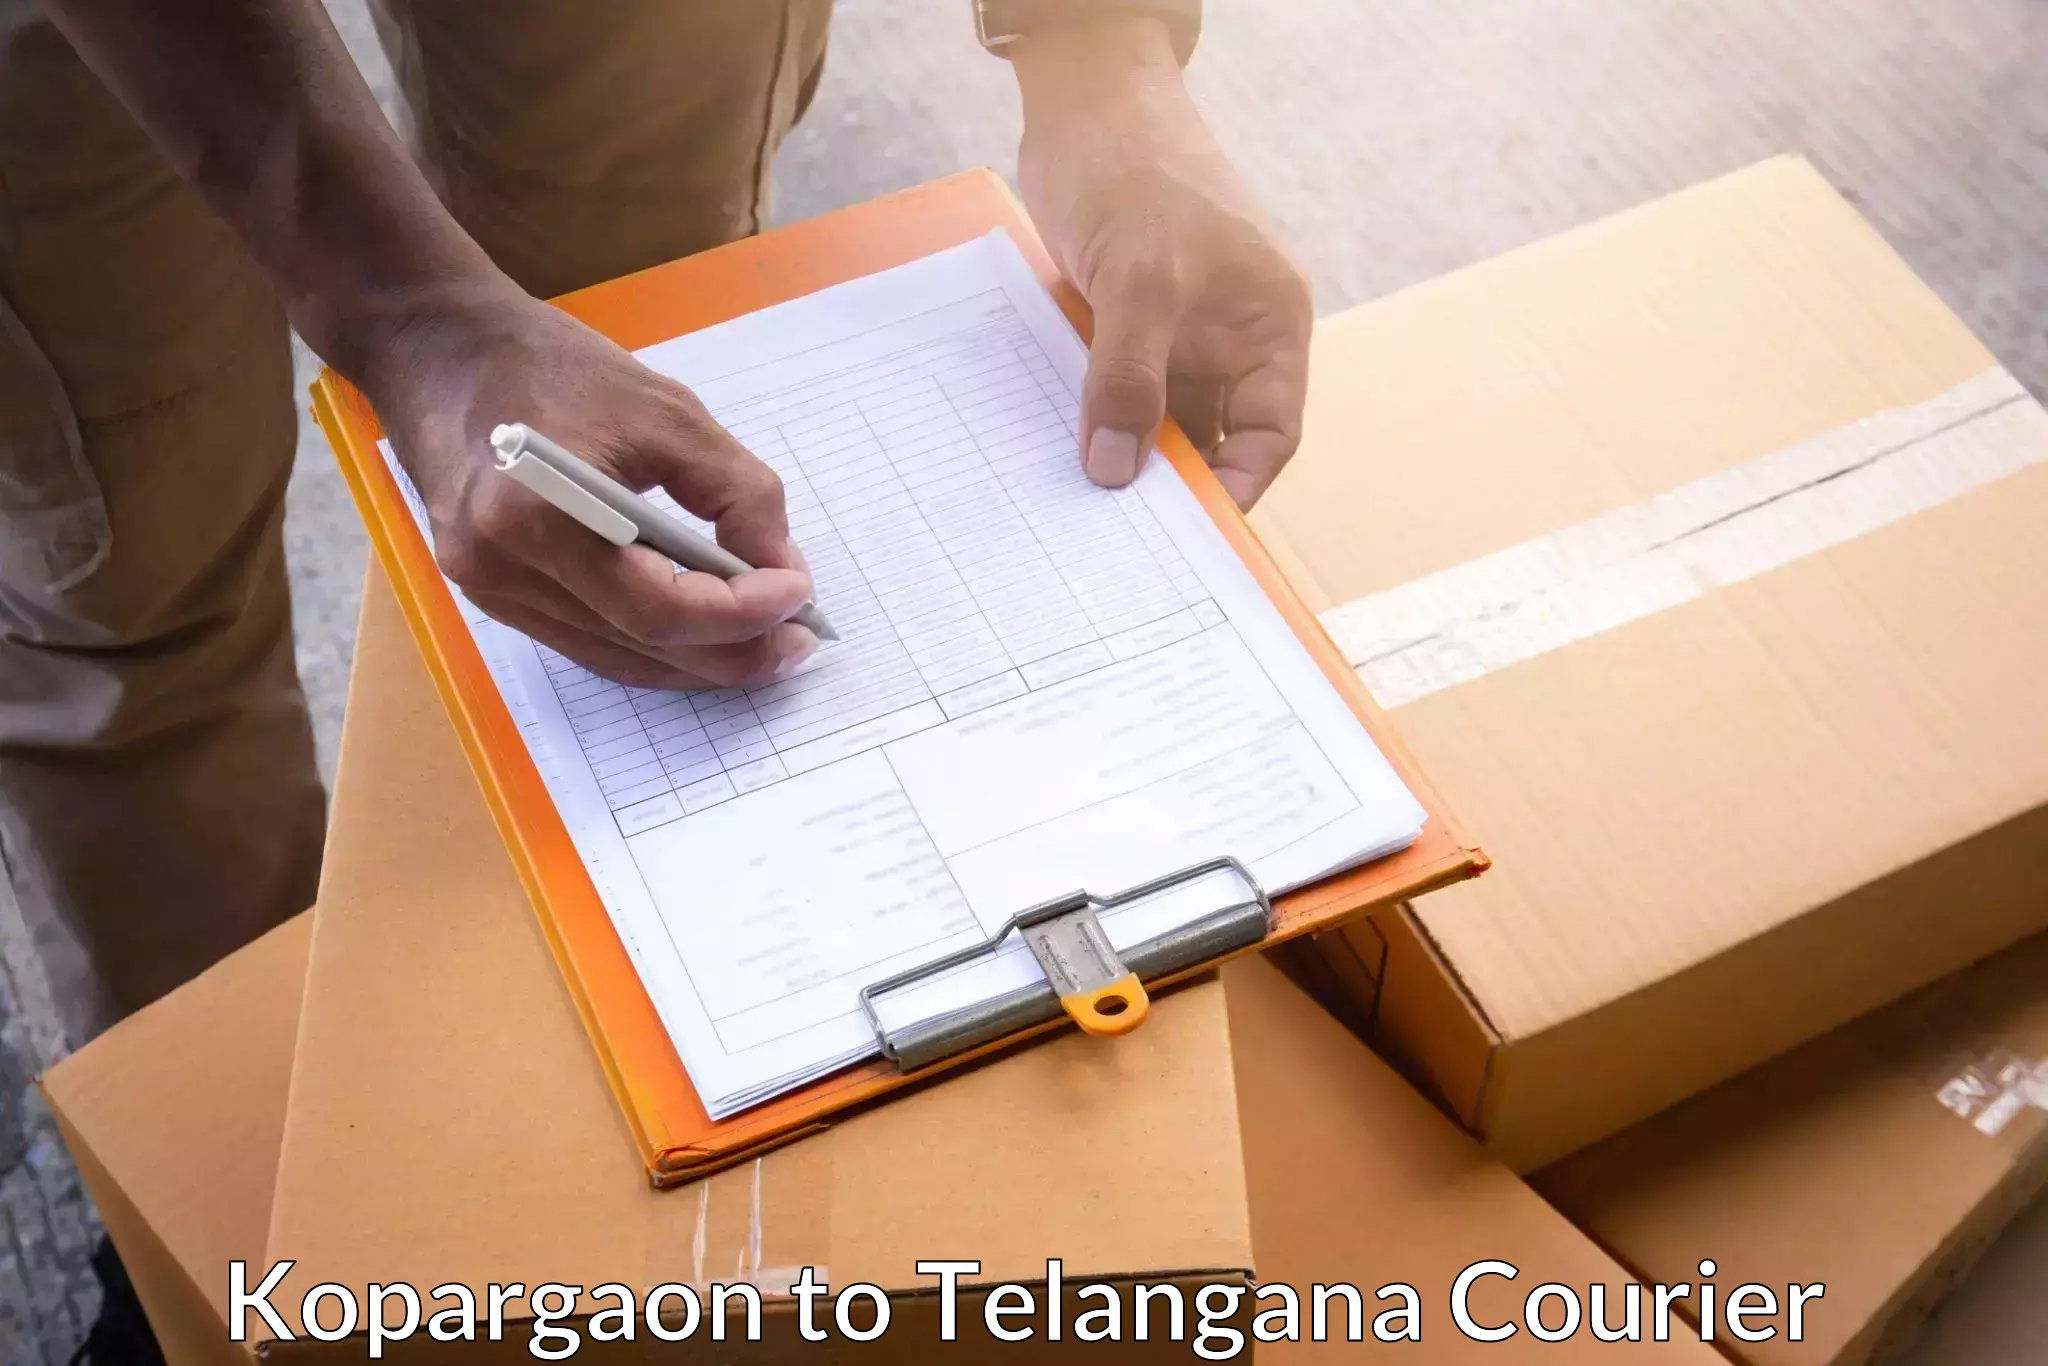 Professional courier handling Kopargaon to Achampet